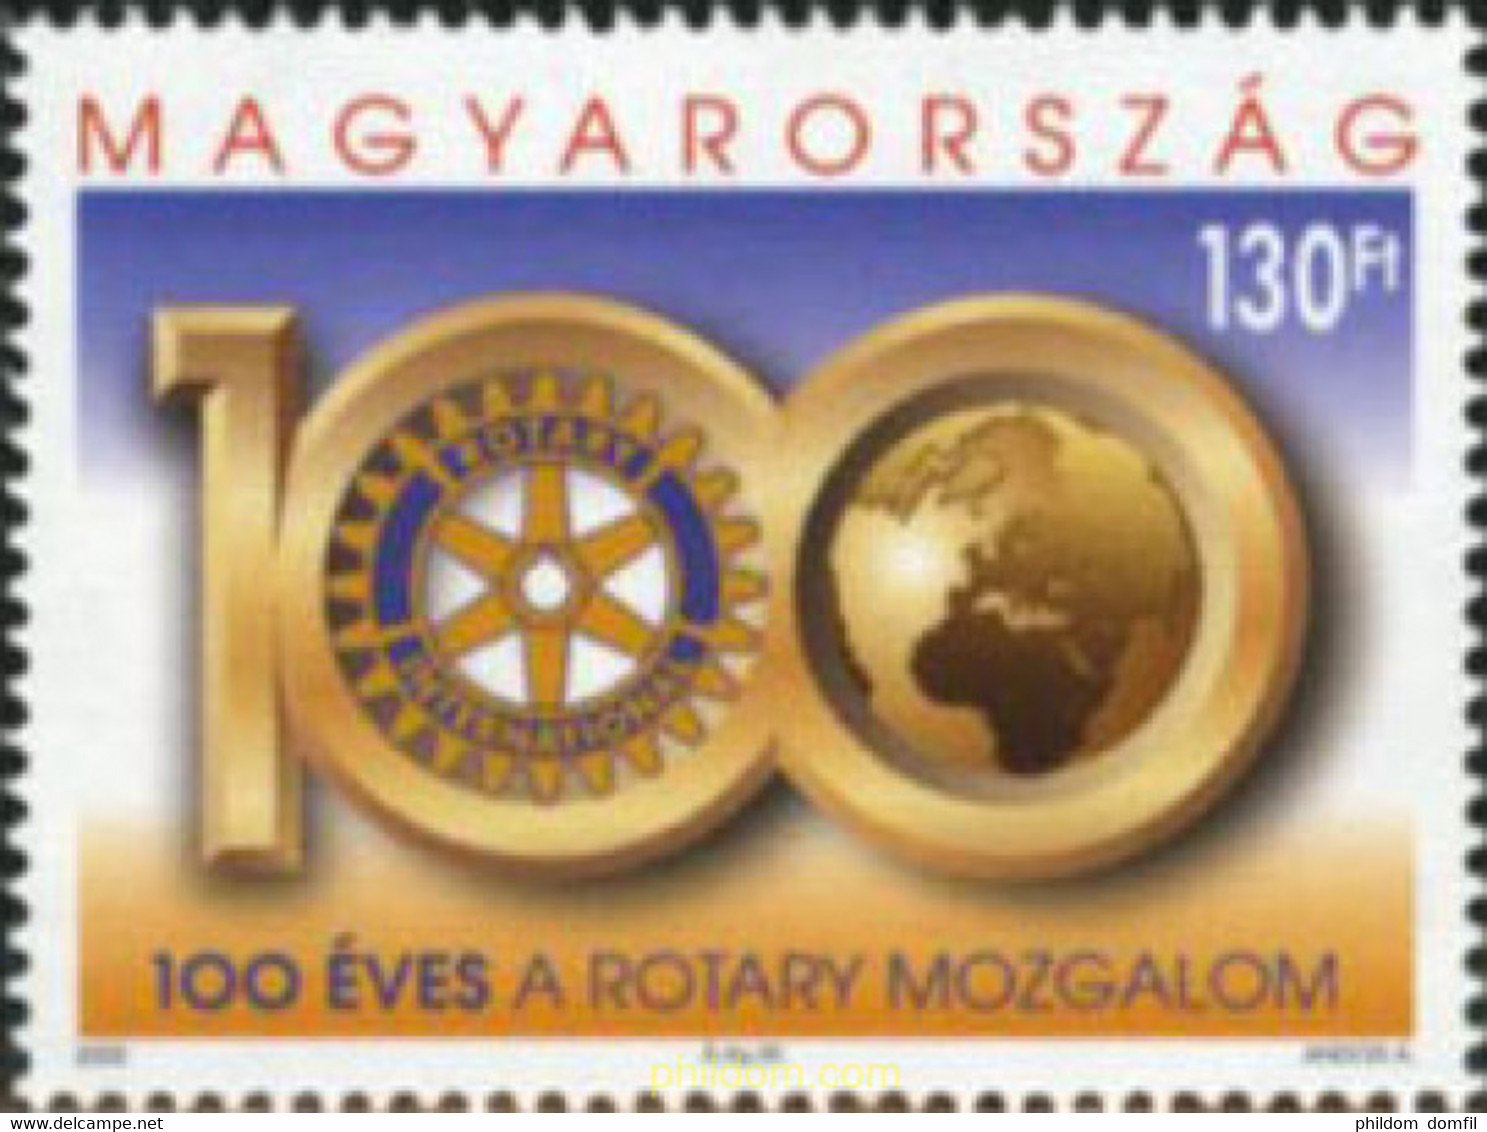 182532 MNH HUNGRIA 2005 CENTENARIO DEL ROTARY CLUB INTERNACIONAL - Used Stamps